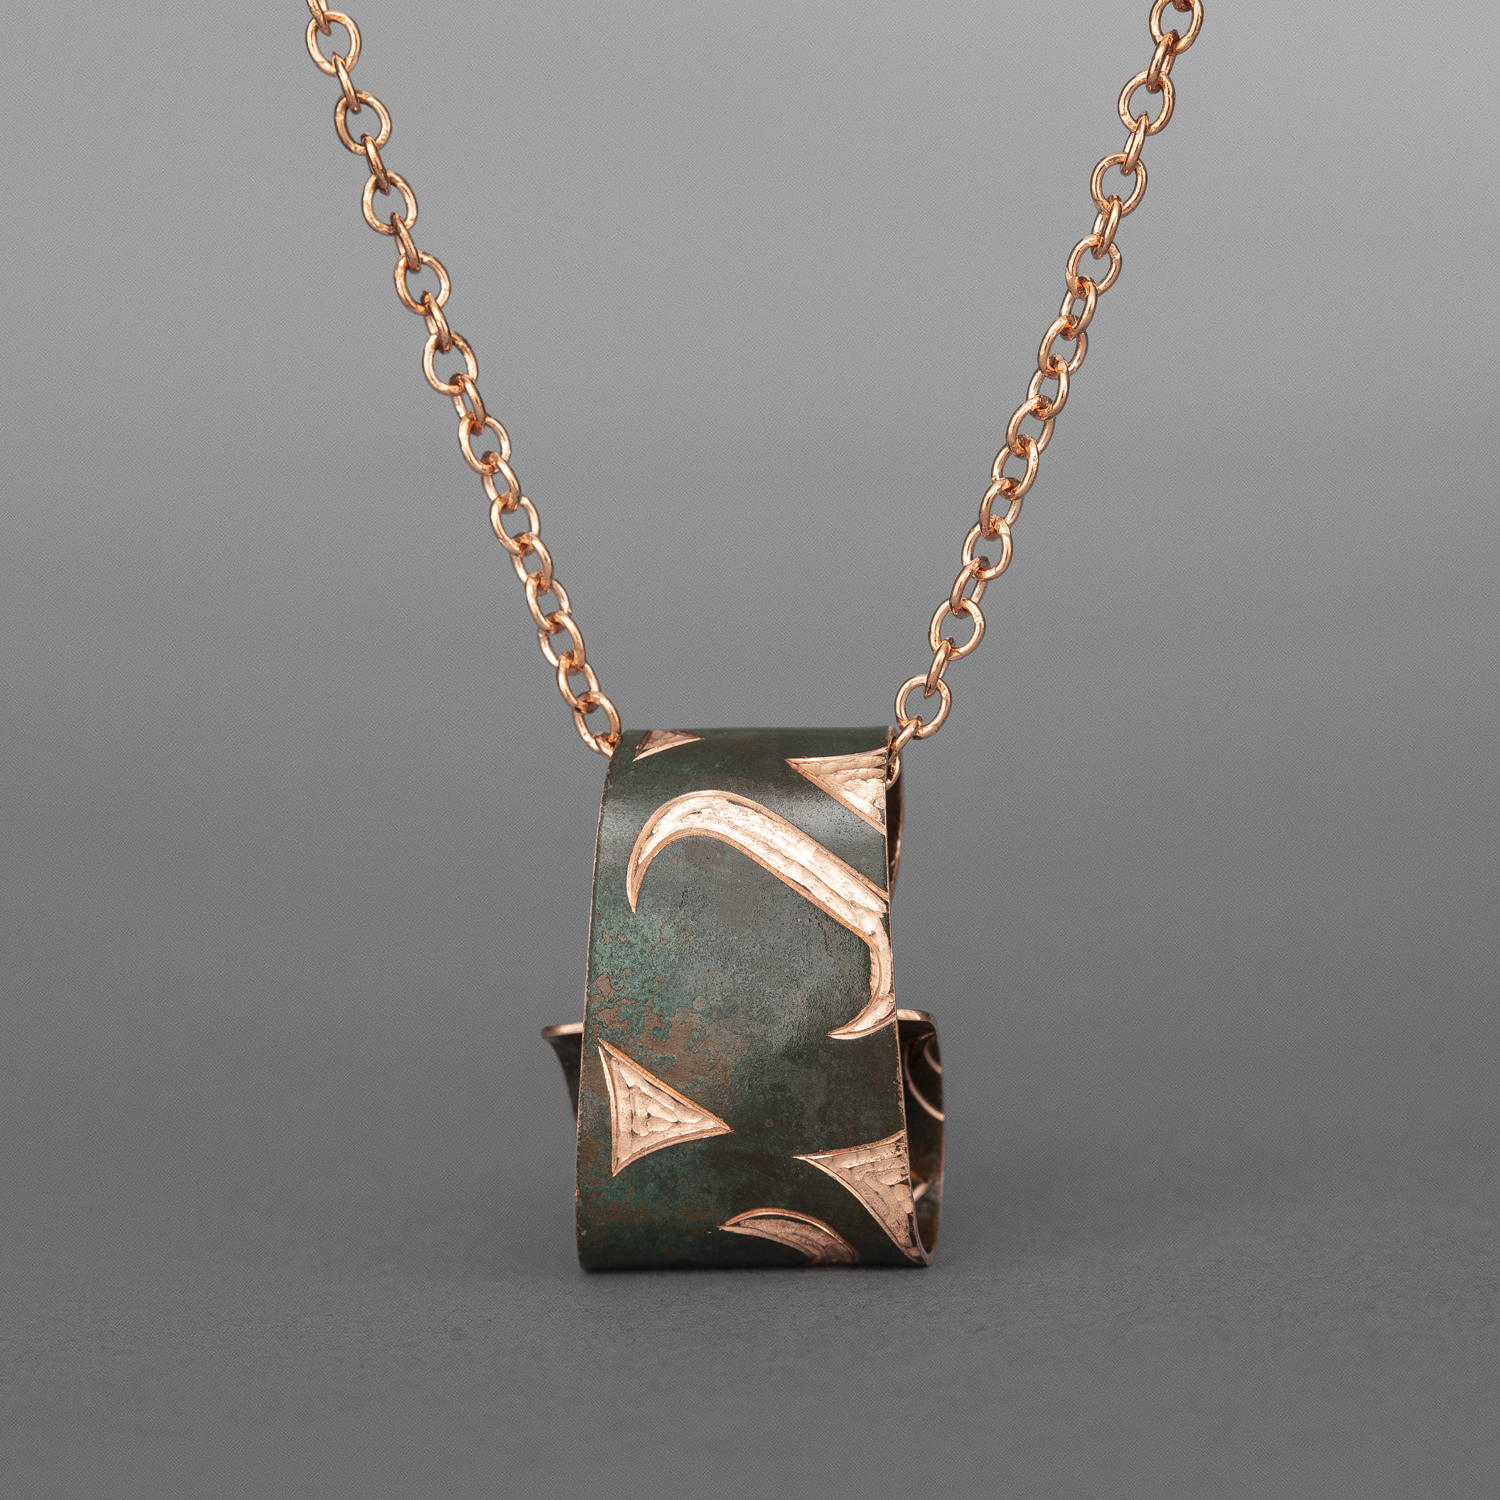 Monogrammed Ovoids Pendant
Jennifer Younger
Tlingit
Copper, copper chain
1"x ¾” pendant, 24" chain
$200